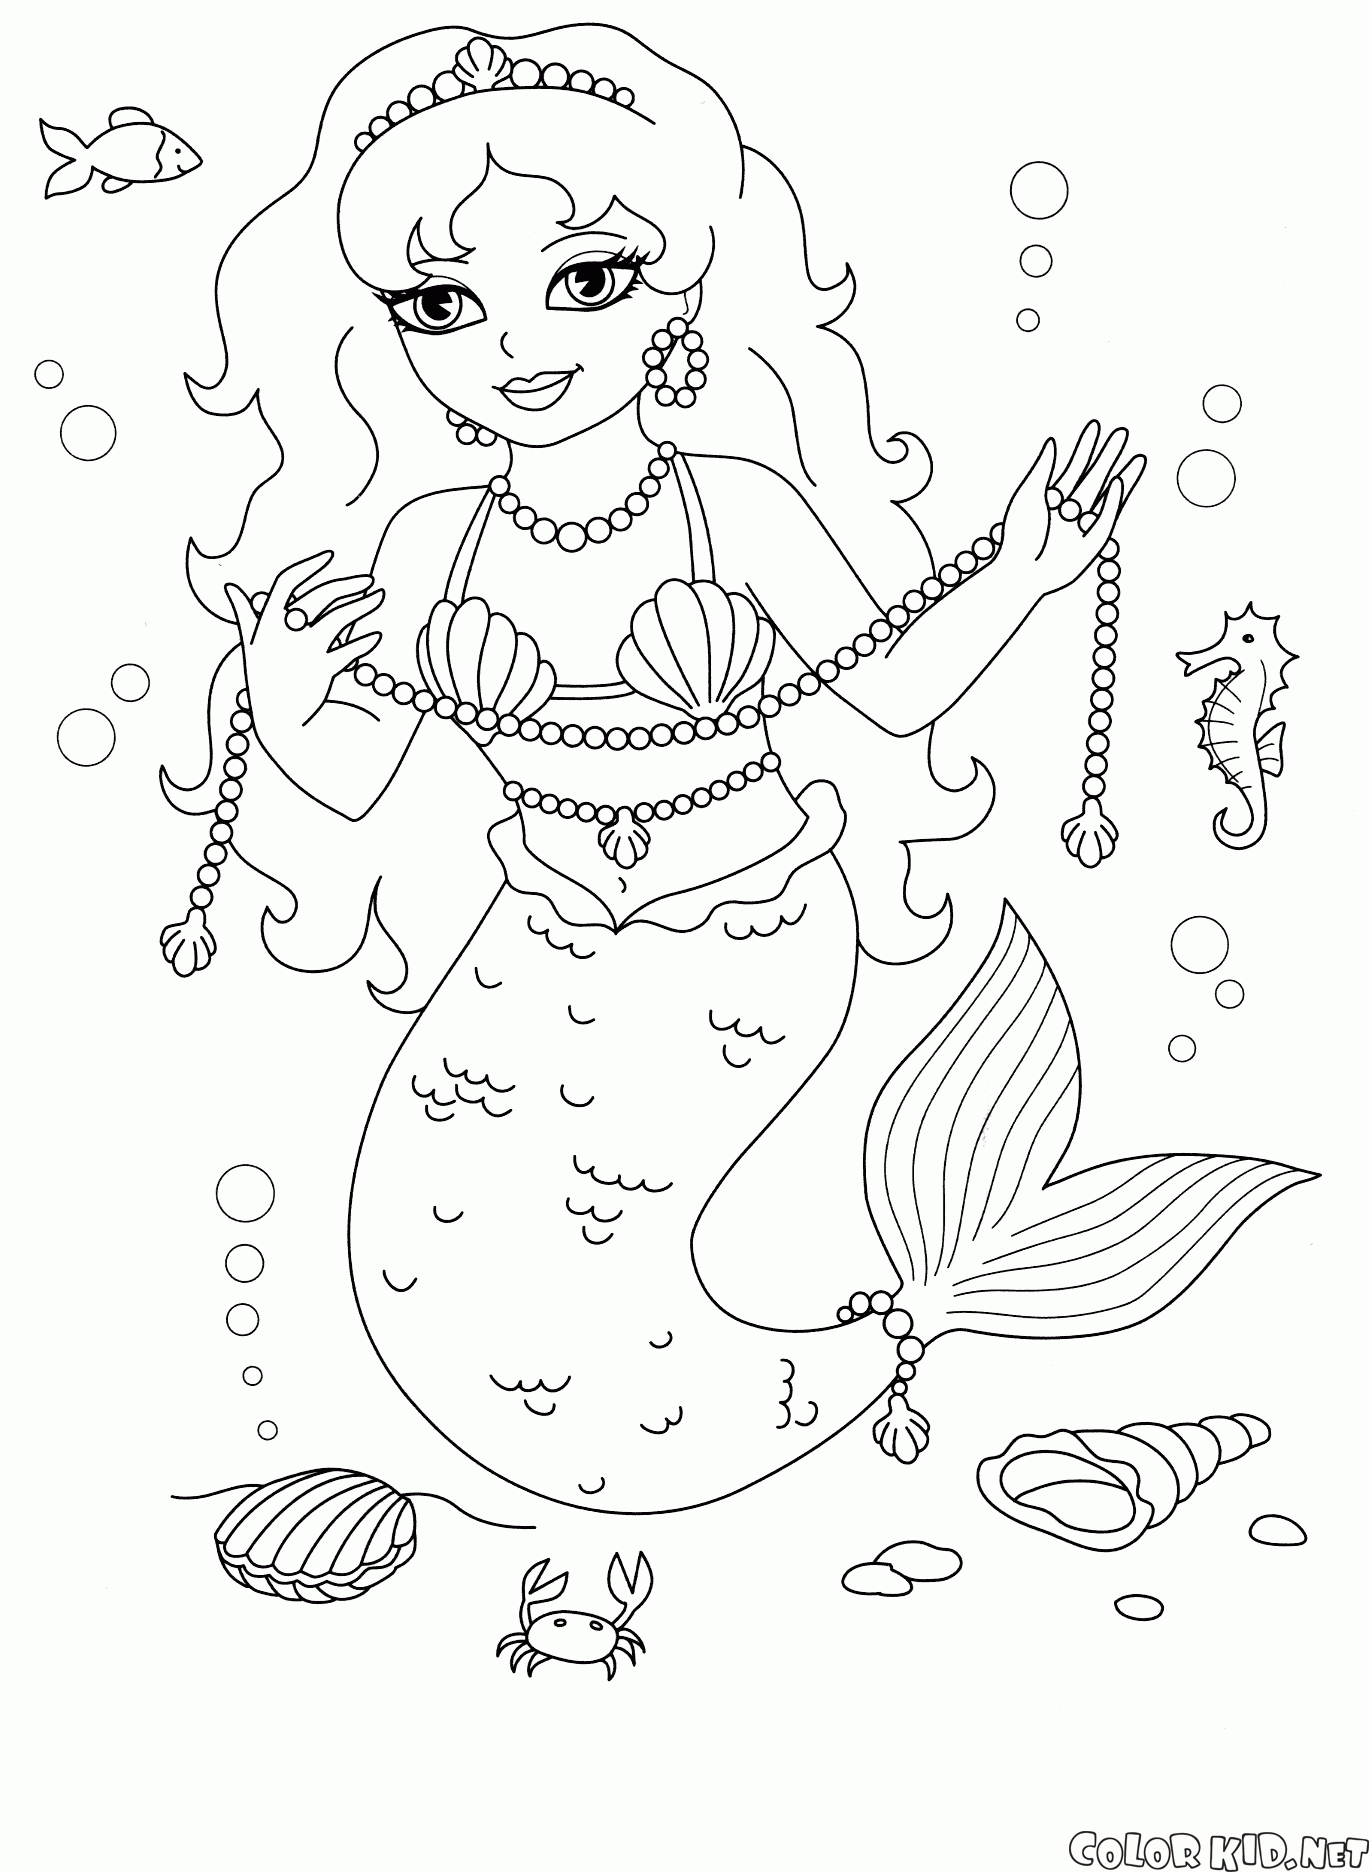 Meerjungfrau auf dem Land